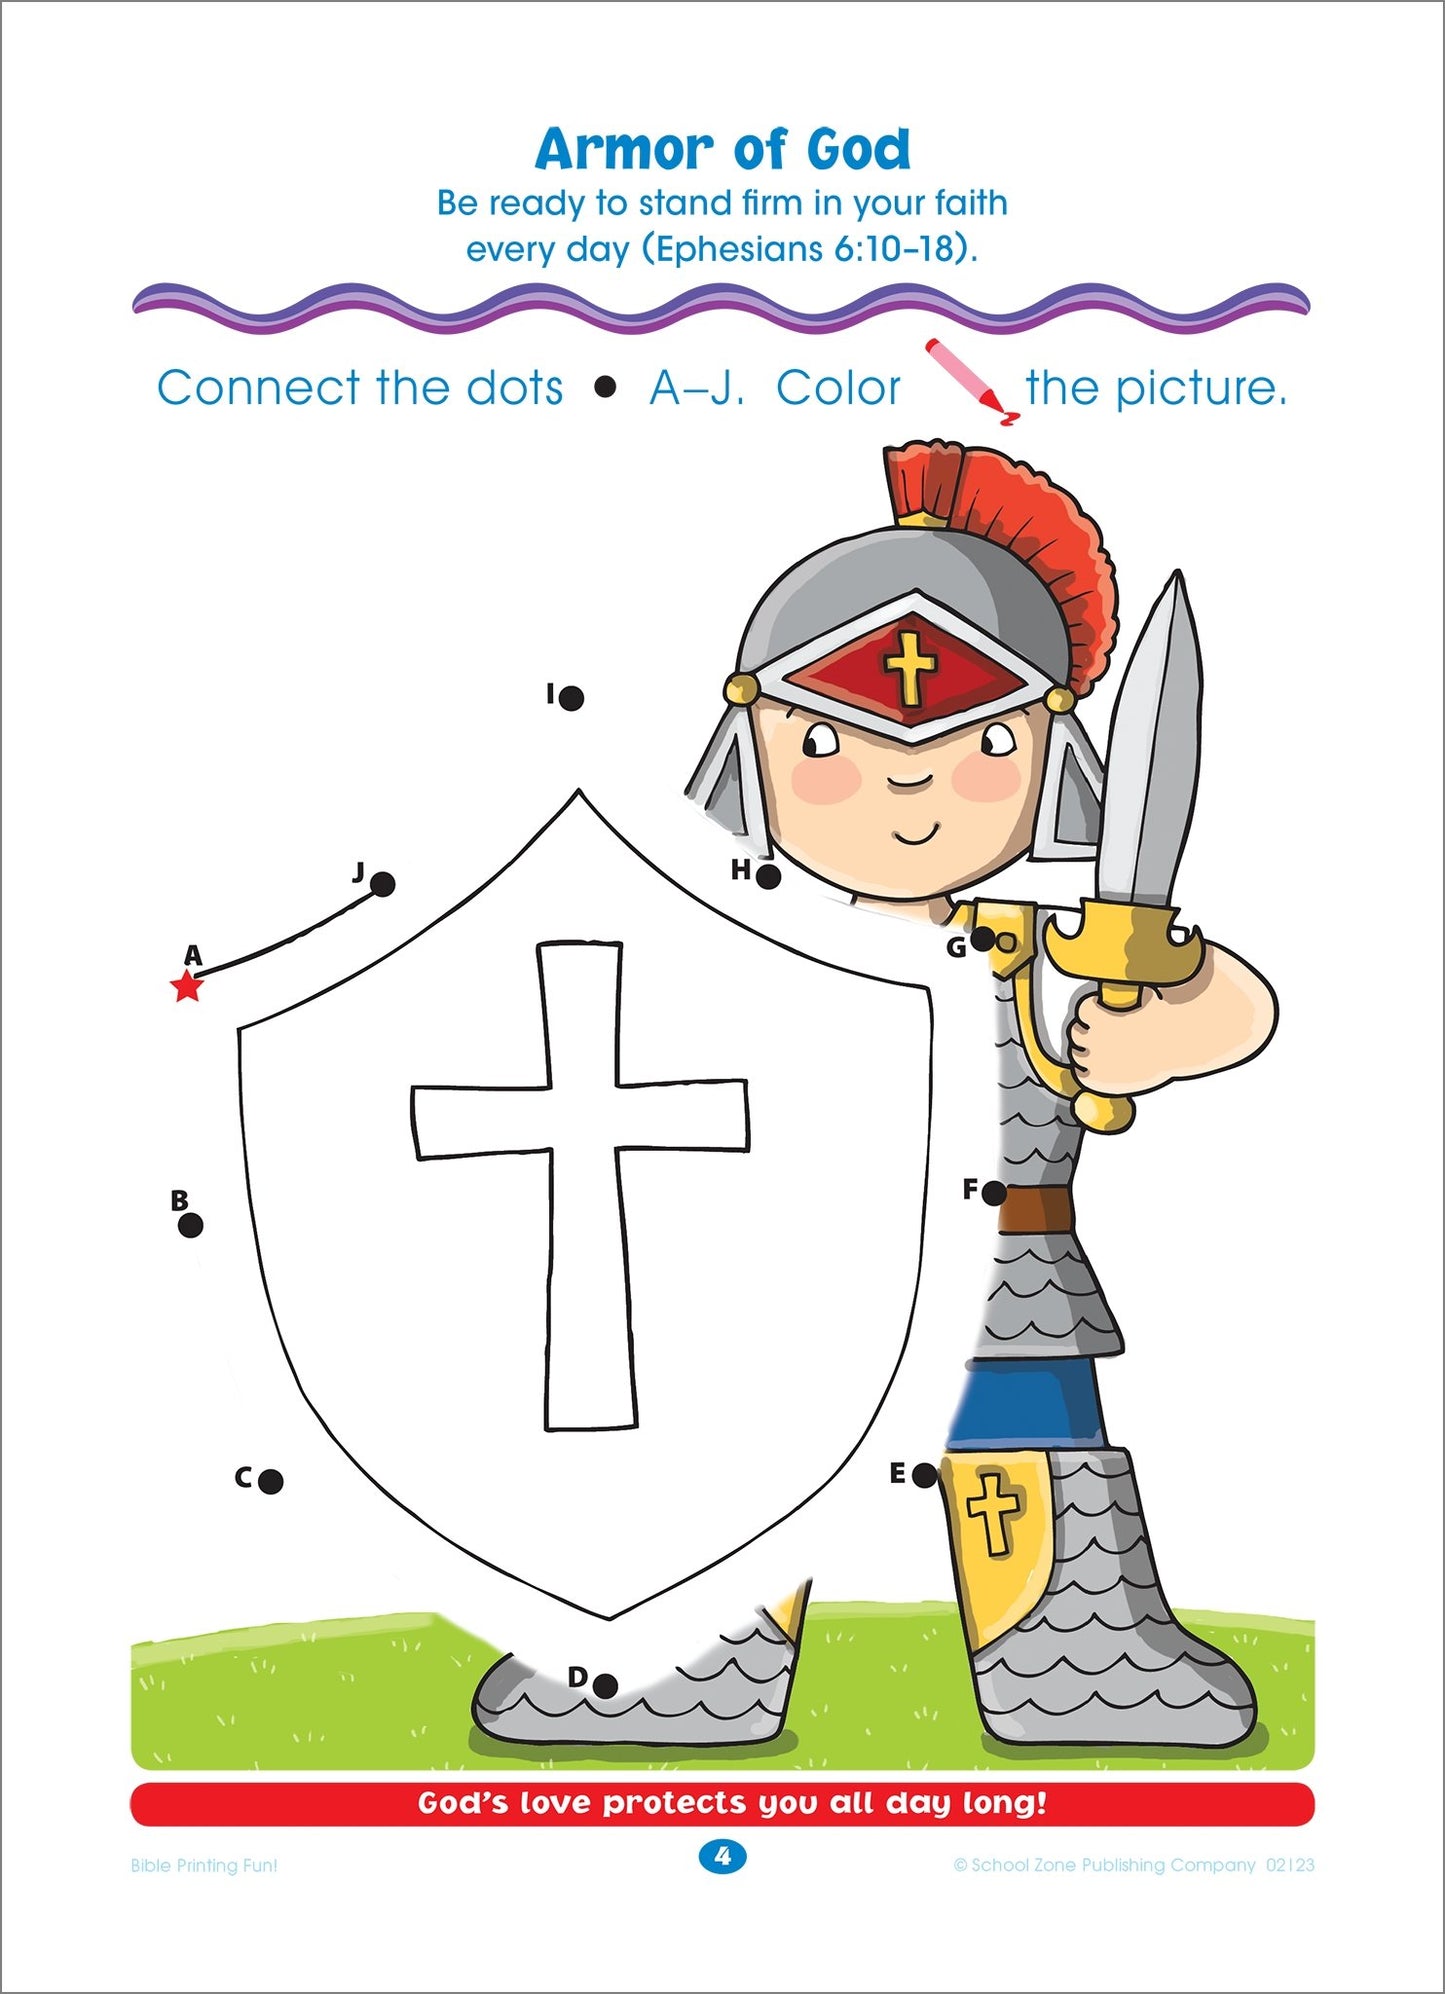 School Zone - Bible Dot-to-Dots! ABCs